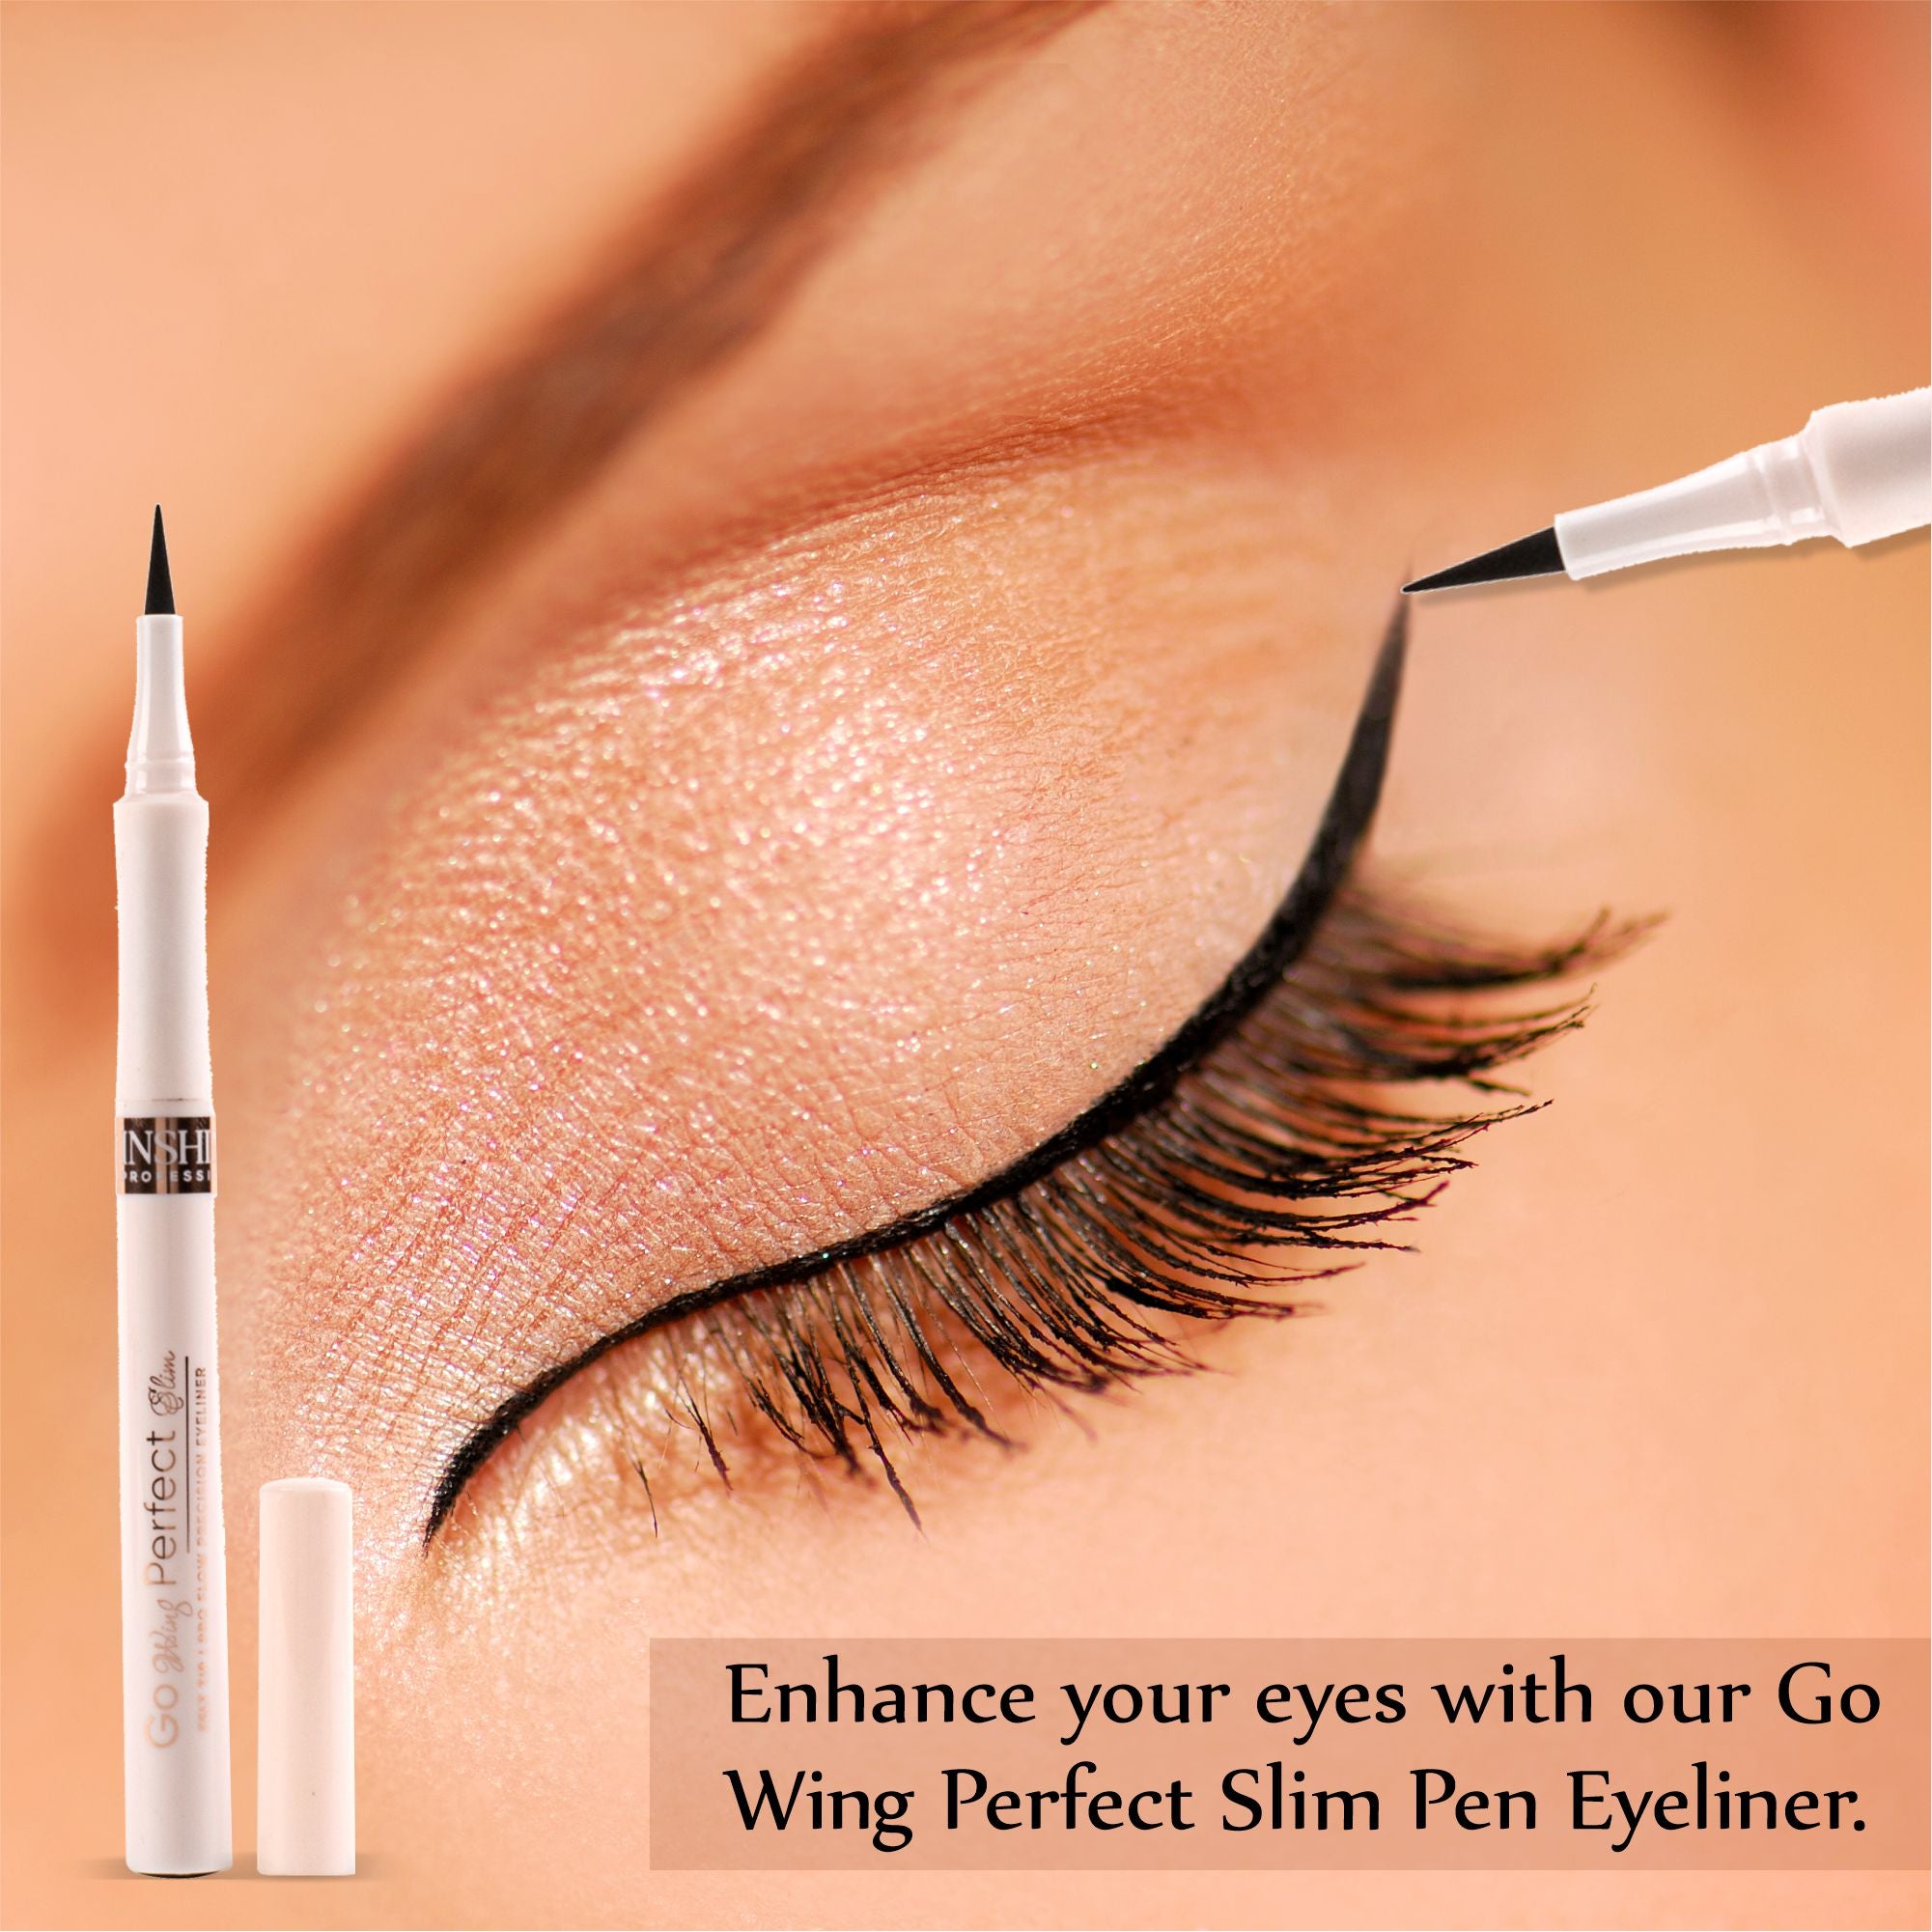 Go Wing Perfect Slim Pen Eyeliner